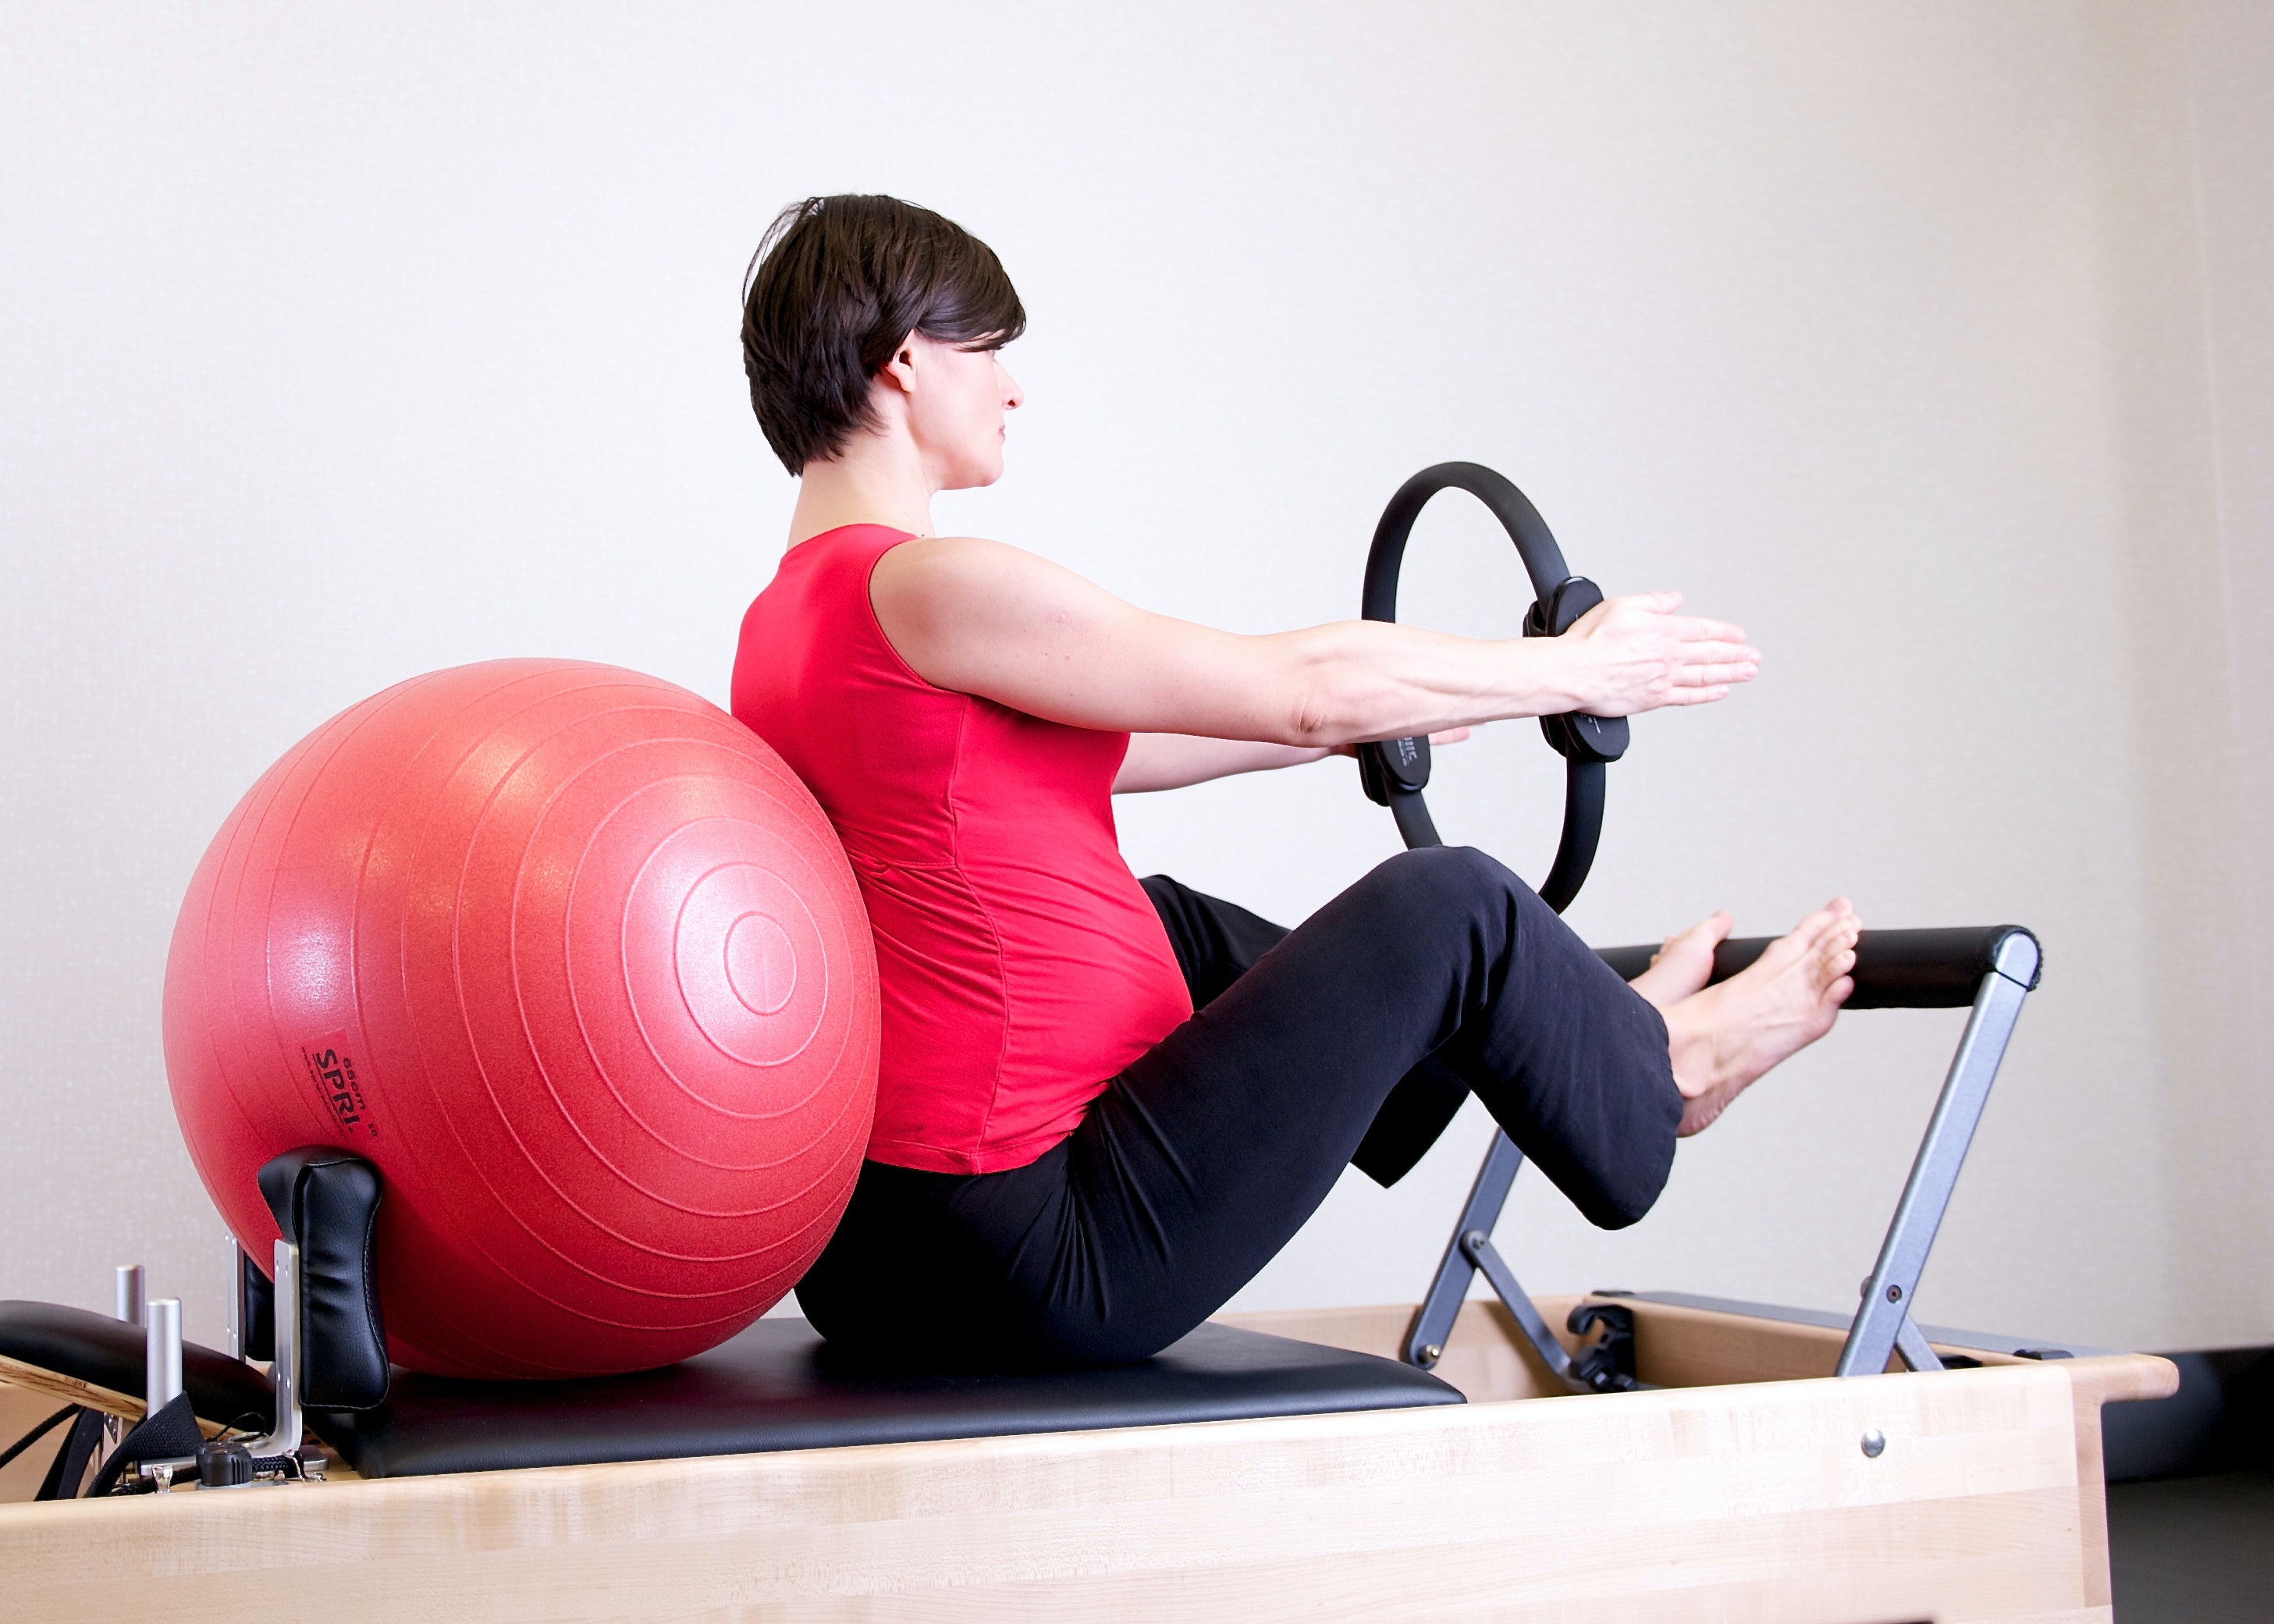 OPDEA - Te acercamos estos #ejercicios físicos para que te